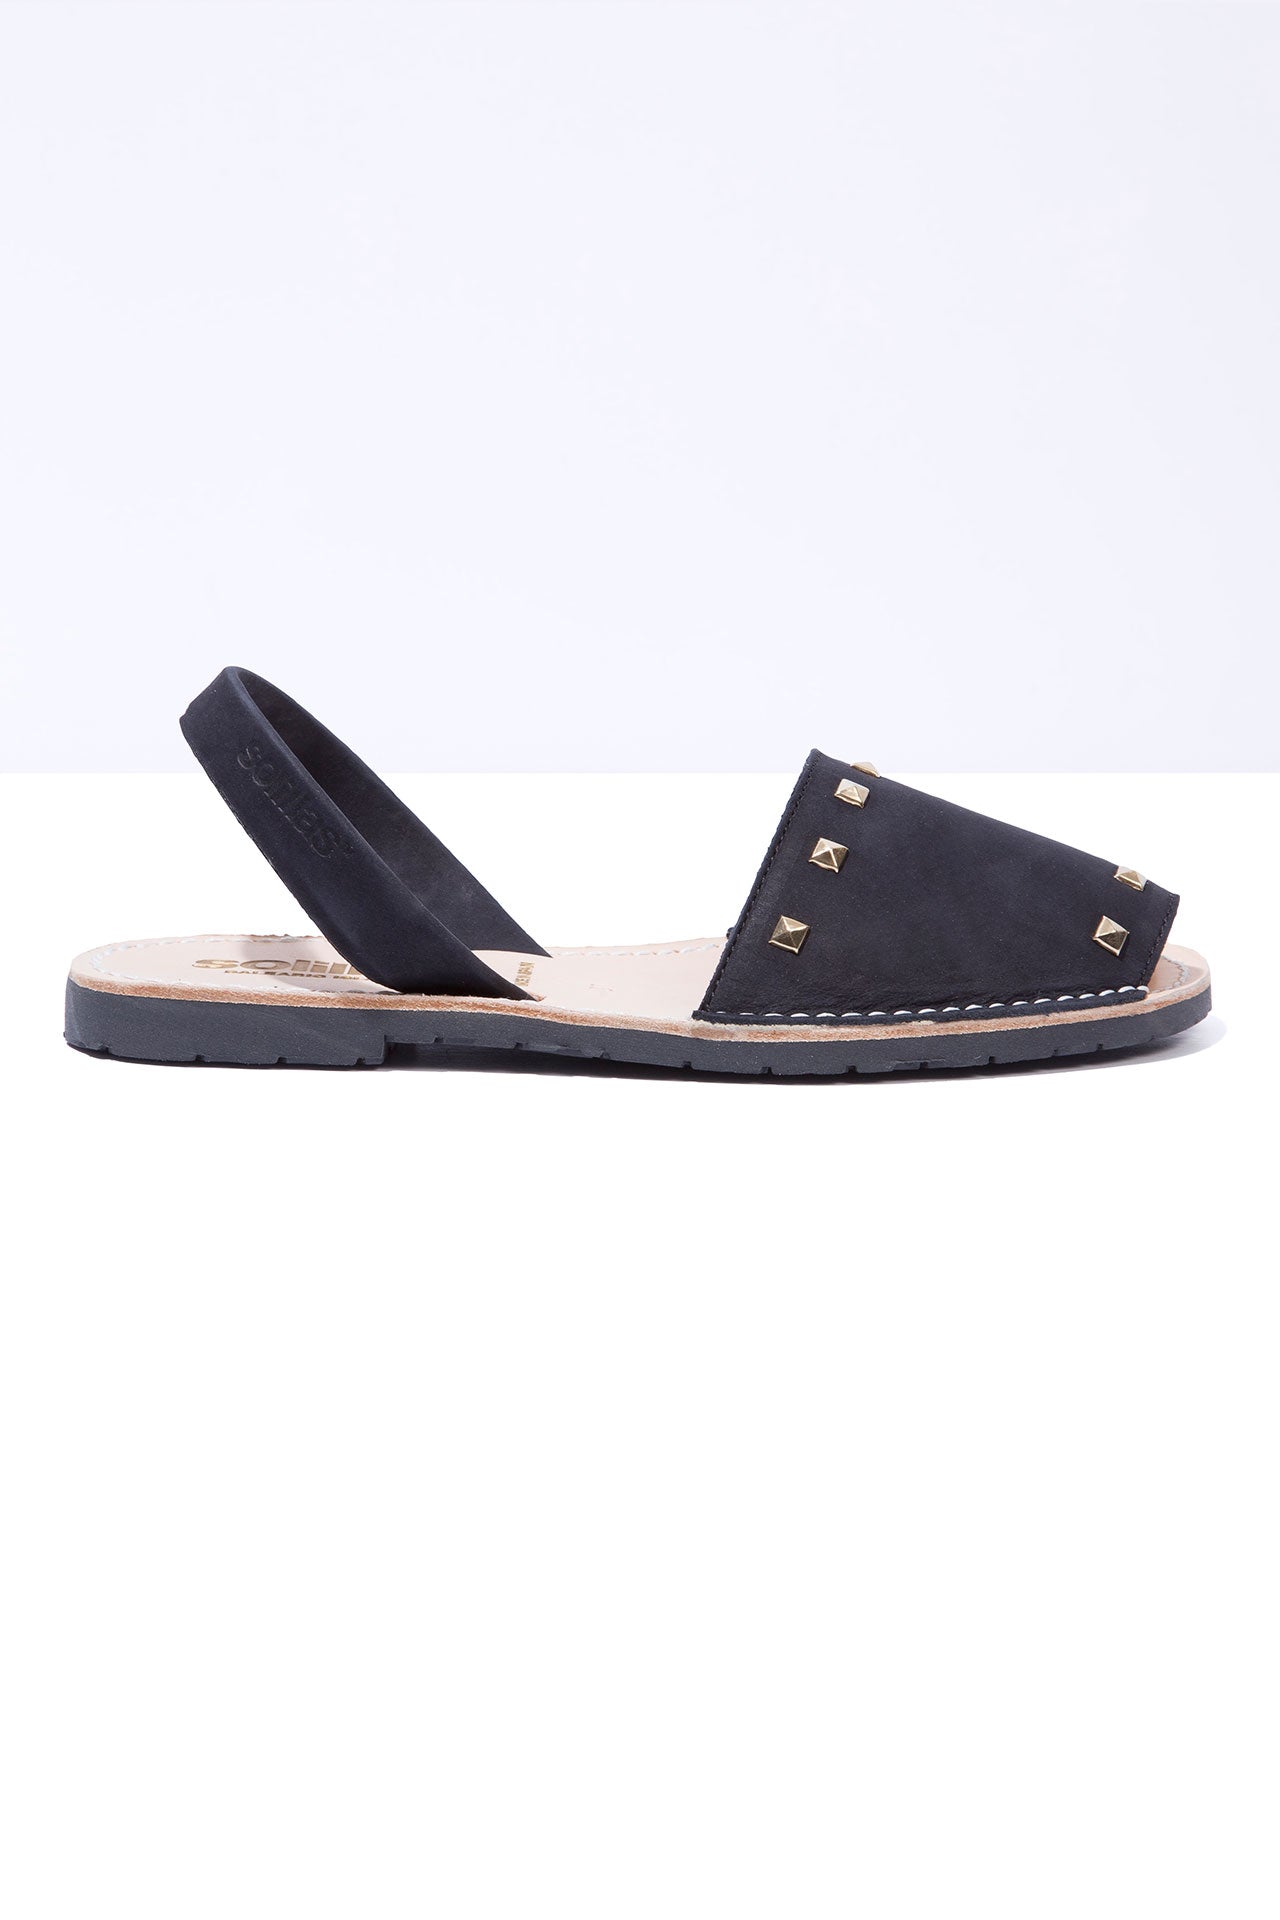 Menorcan Sandals | Original Black Studs 